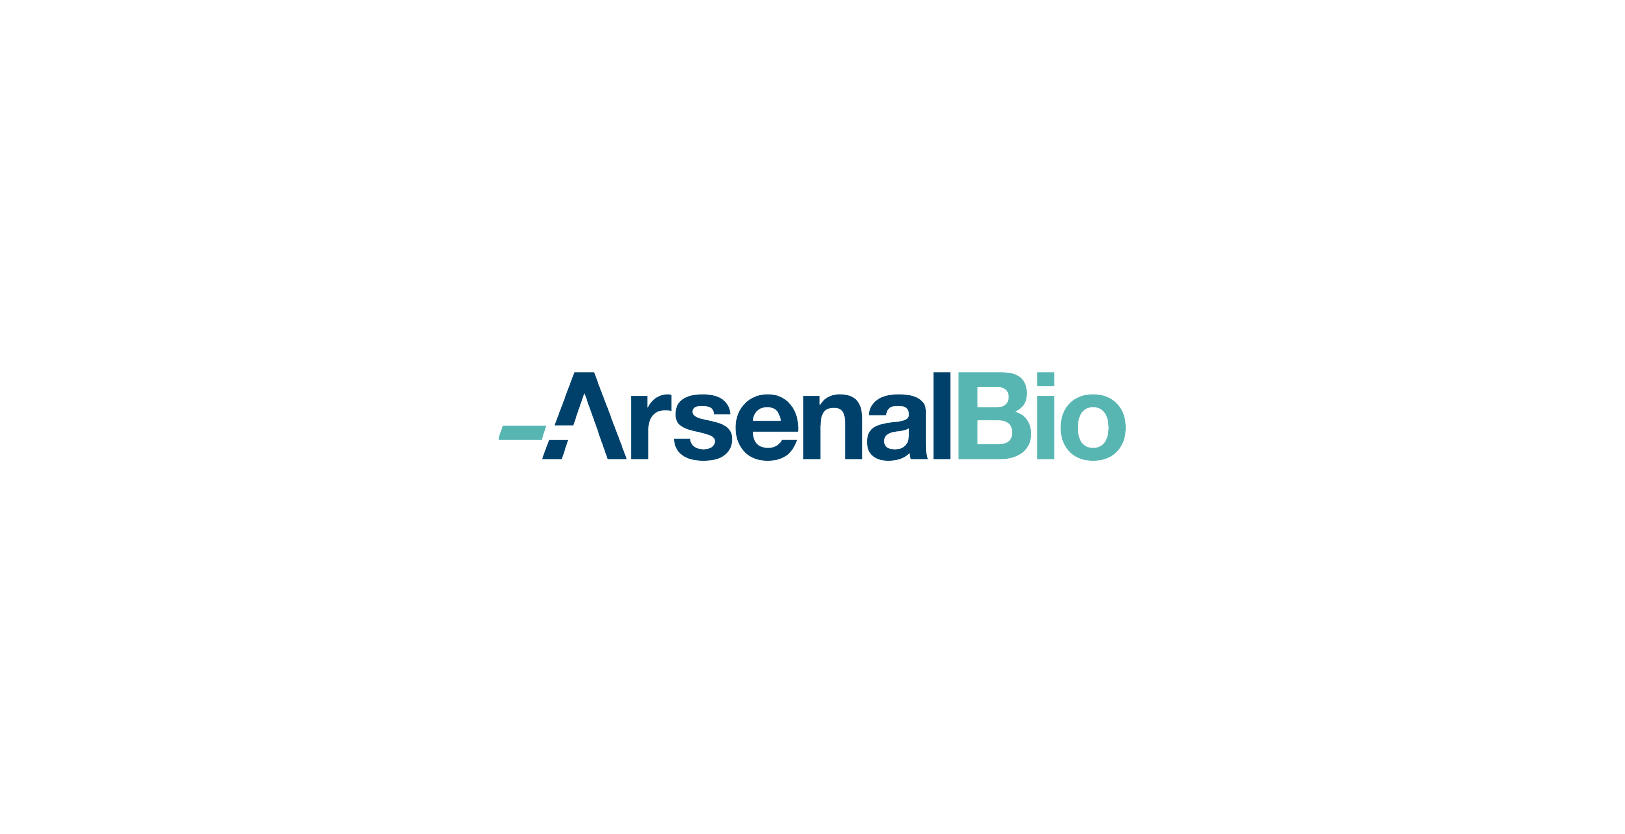 Vision Fund investment portfolio company ArsenalBio's logo